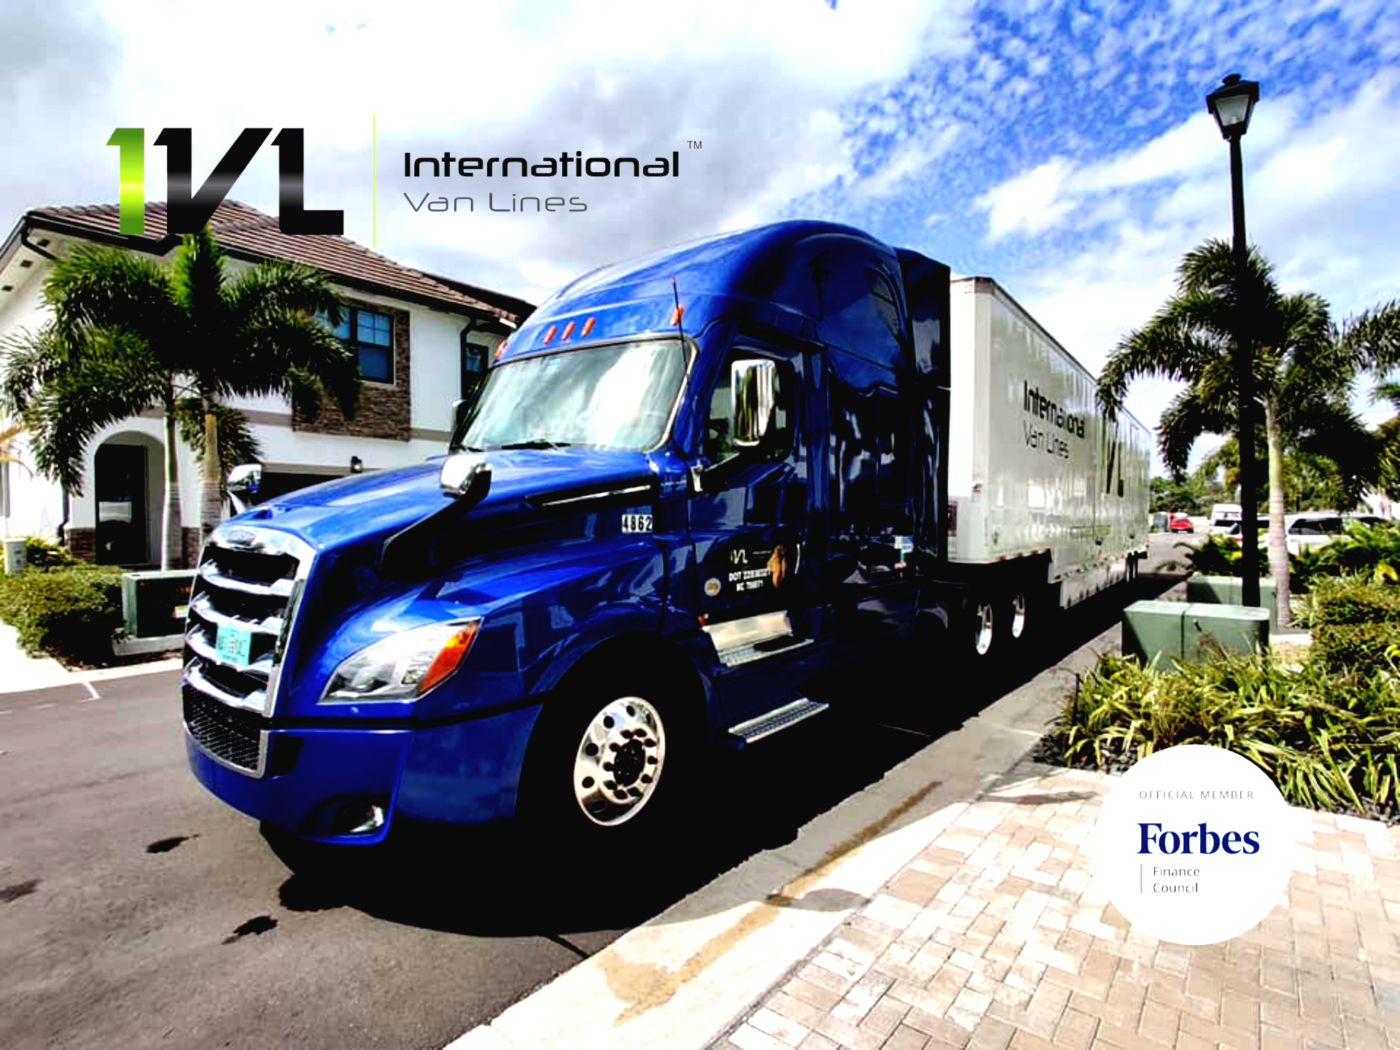 Long-distance moving company International Van Lines